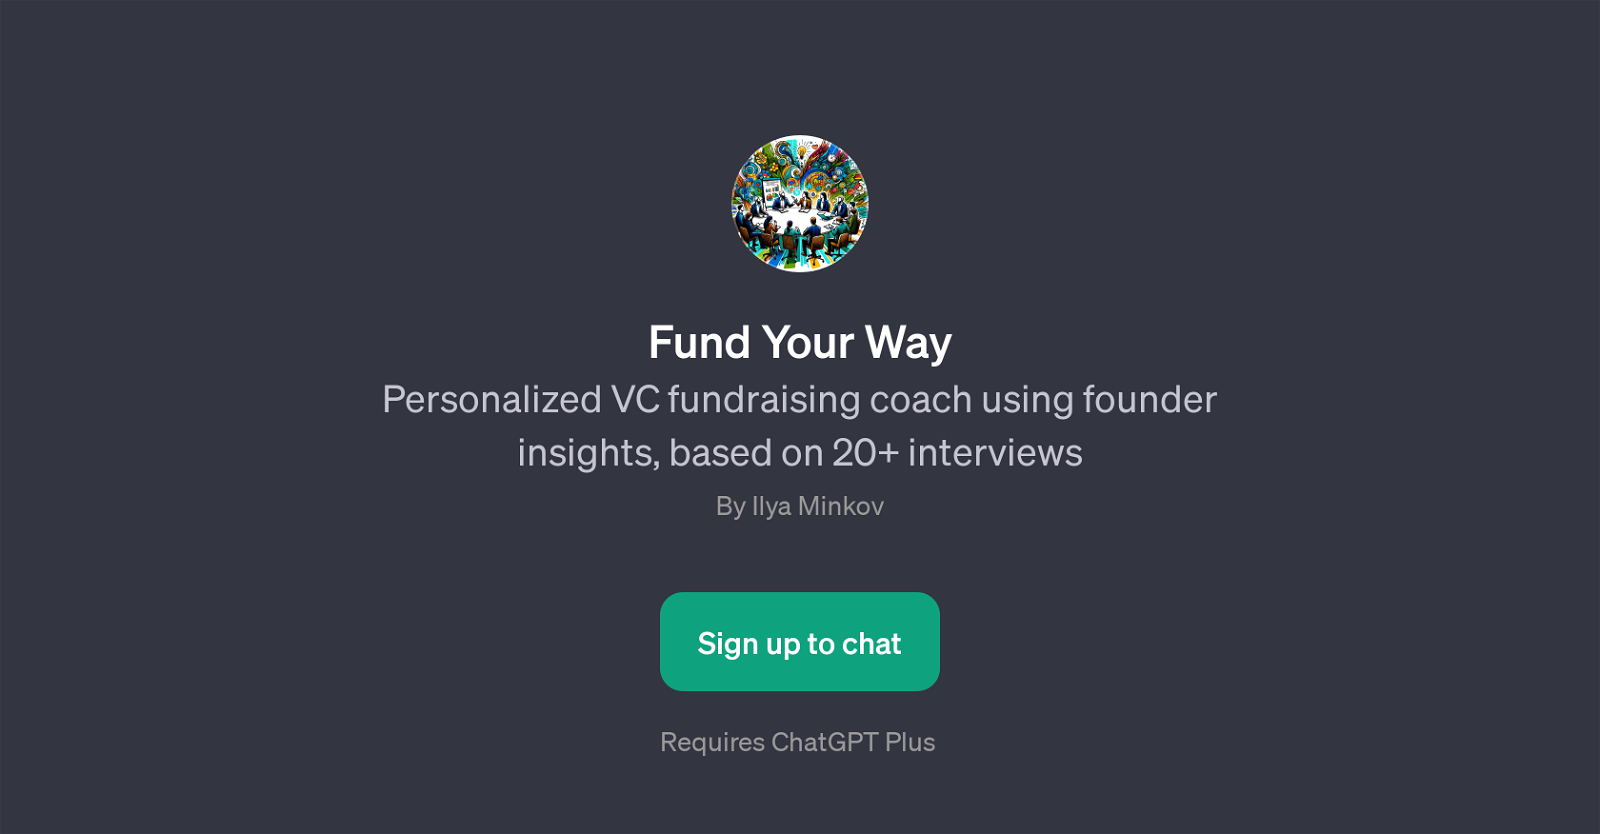 Fund Your Way website